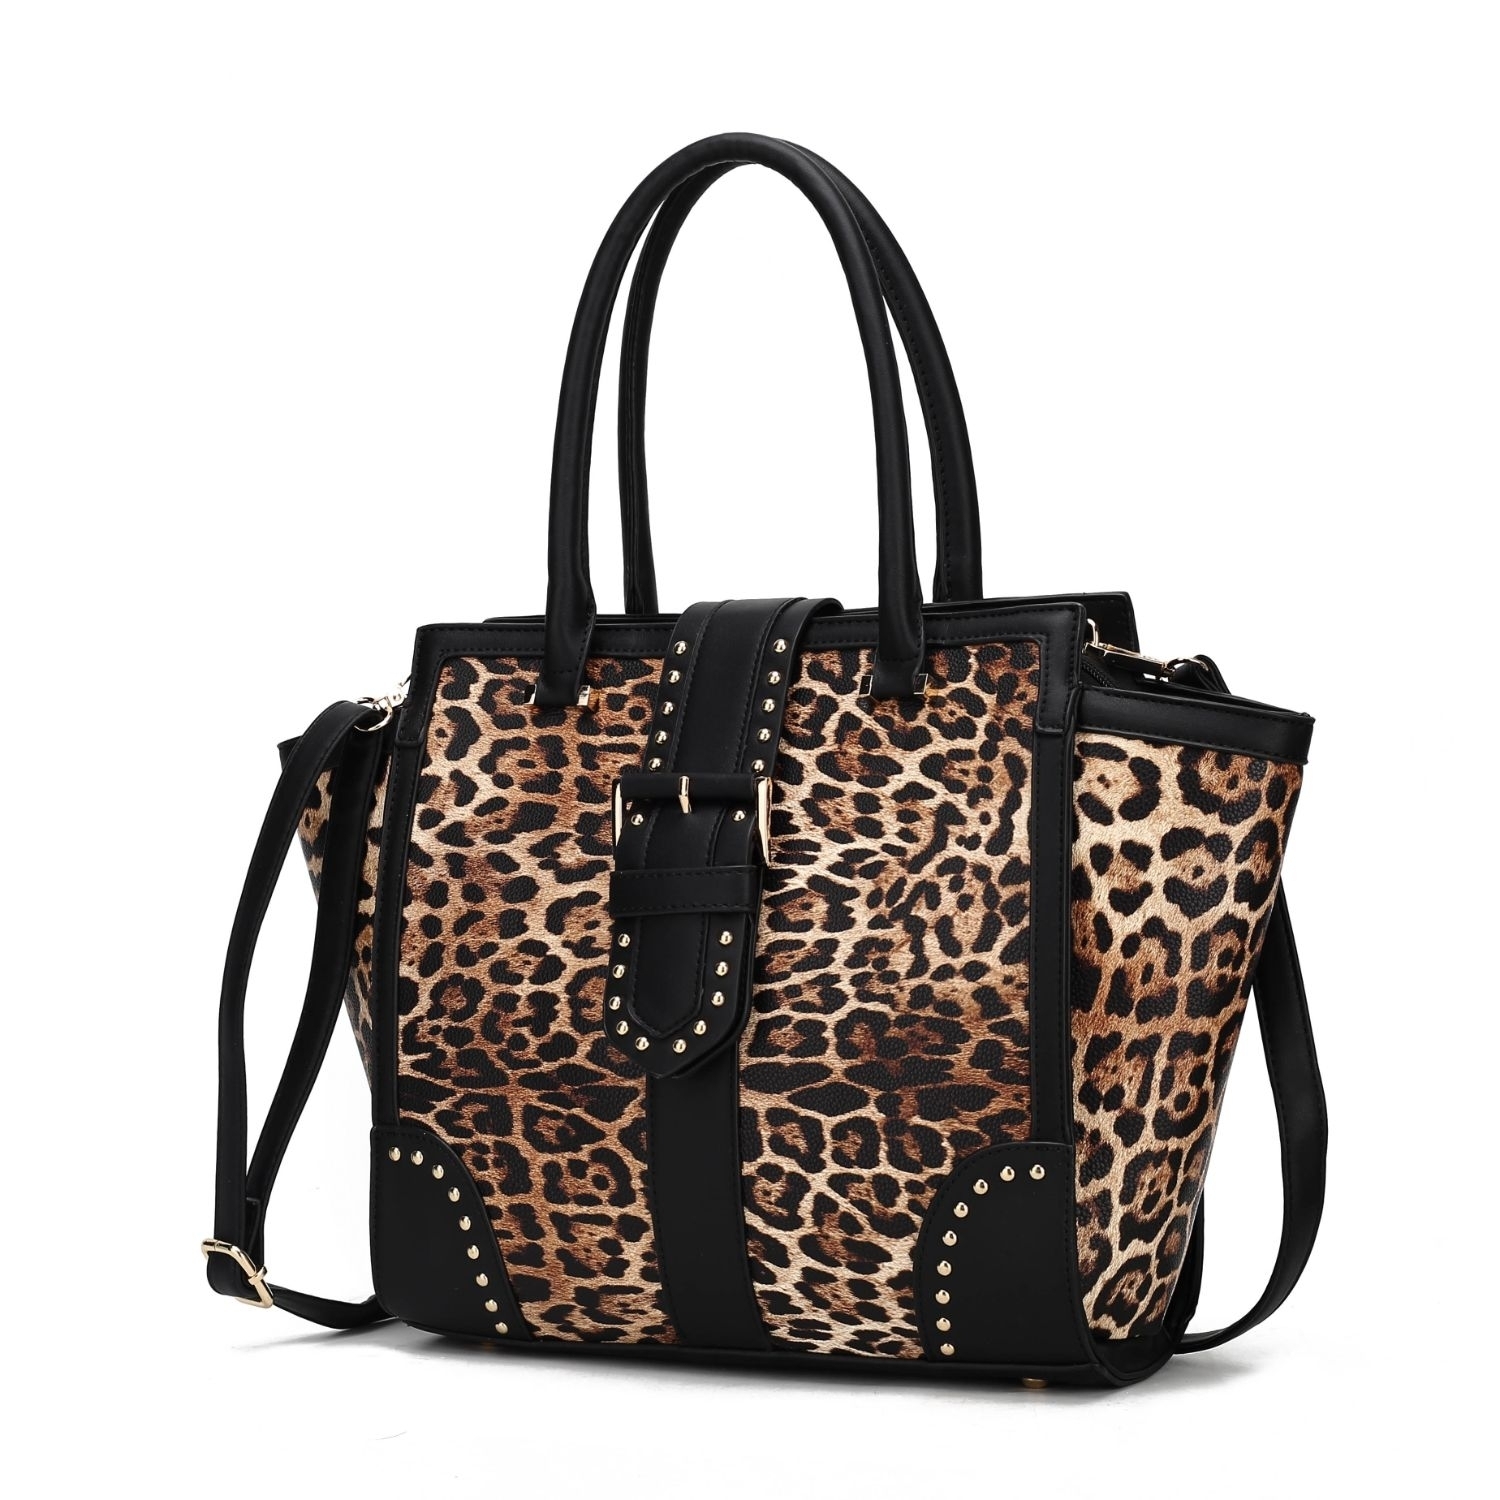 MKF Collection Ilana Satchel Handbag By Mia K - Pink